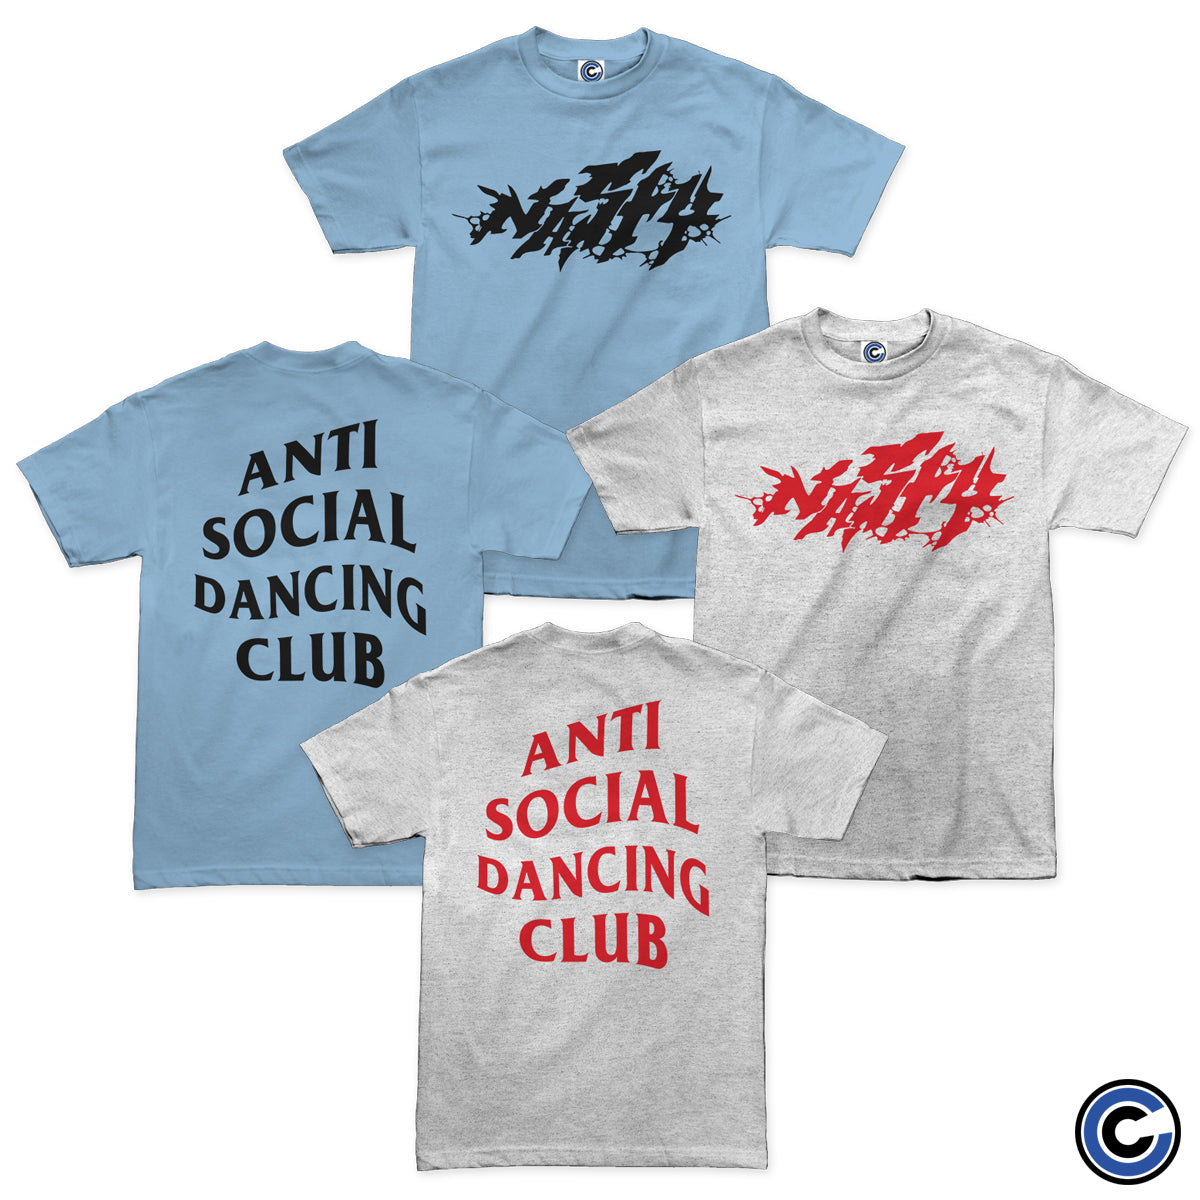 Nasty "Anti Social V2" Shirt